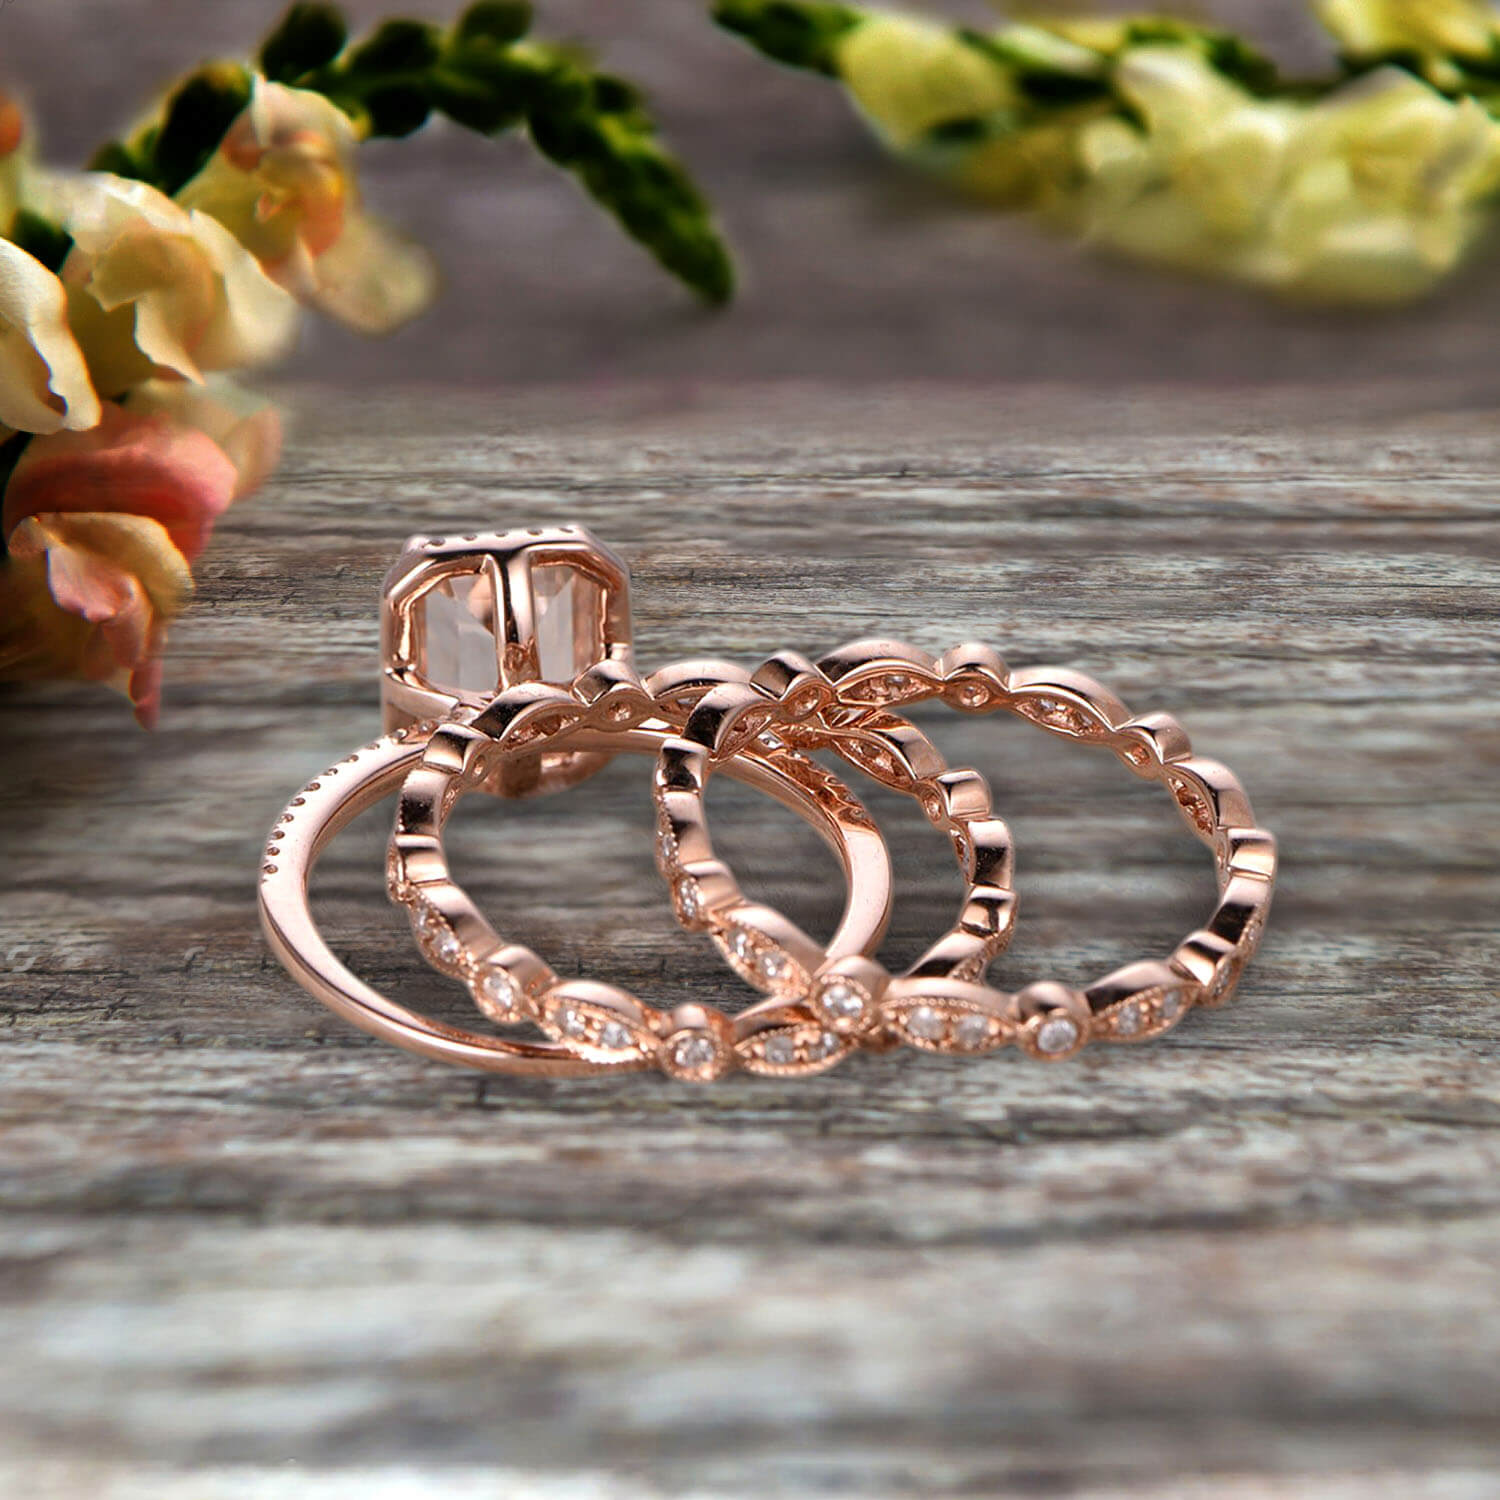 JeenJewels Trio Set 2.75 Carat 7x5mm Emerald Cut Morganite Wedding Engagement Anniversary Ring 14k Rose Gold Art Deco Startling Ring